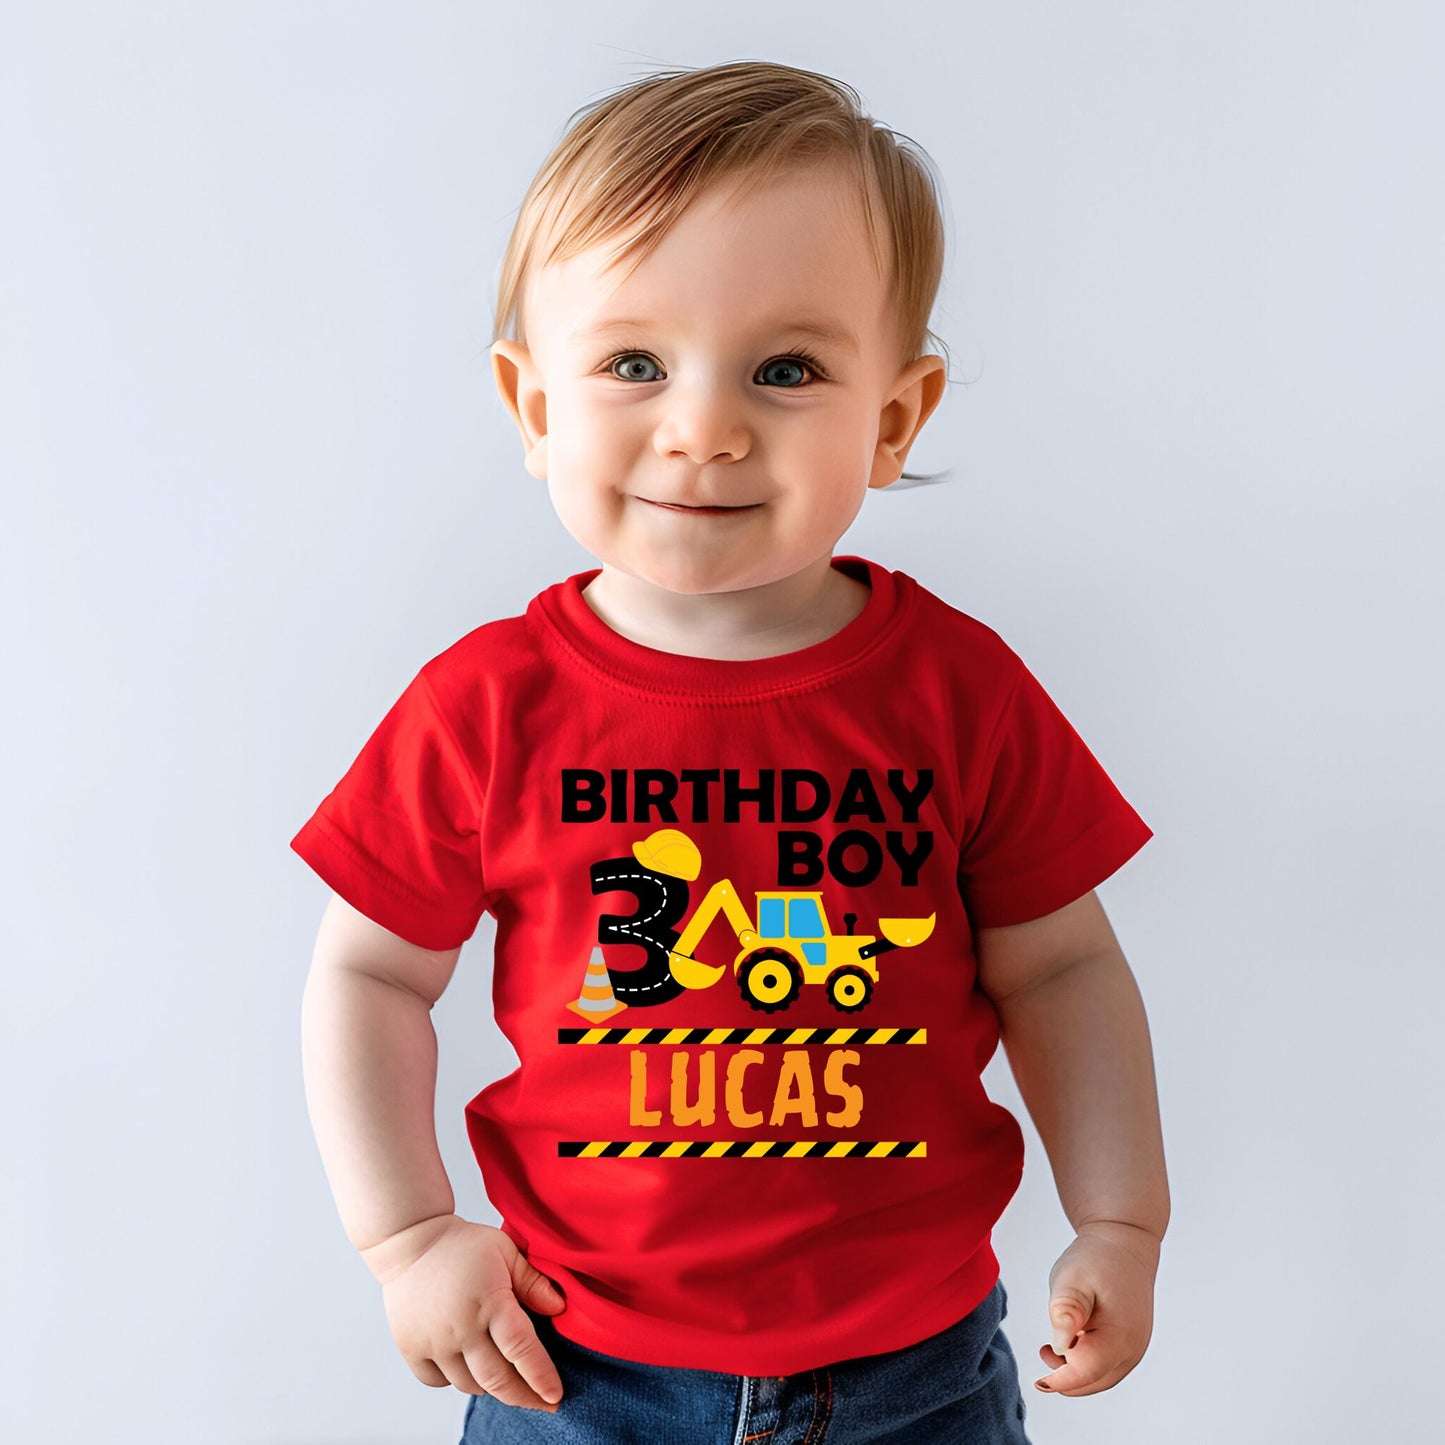 Personalized "Birthday Boy" Baby Romper / Baby Tees: Bulldoze into Fun!"